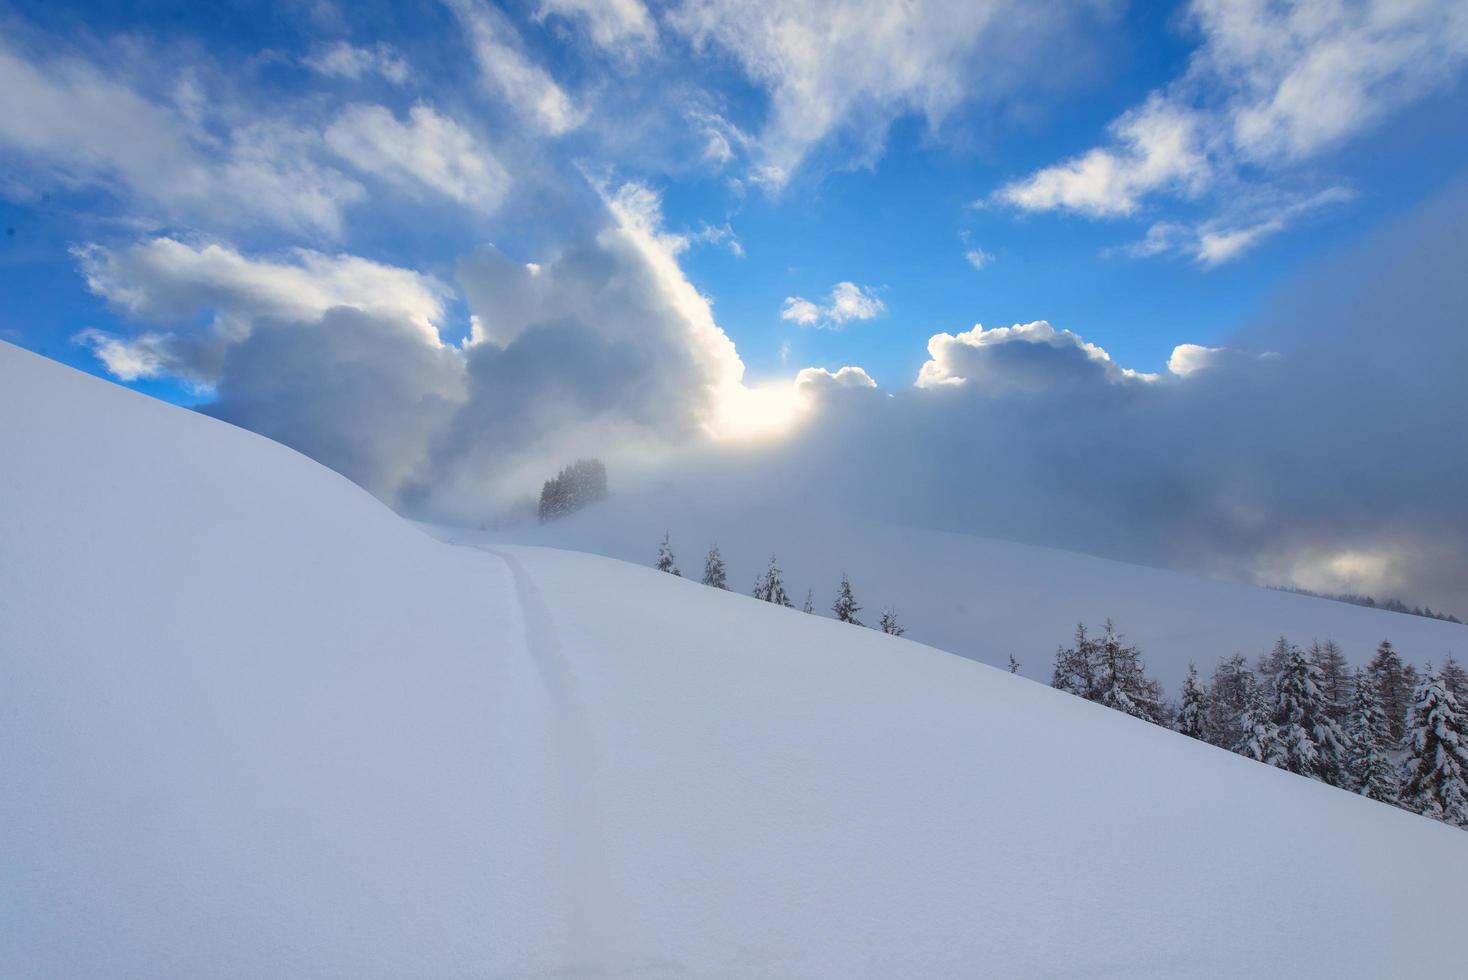 bergbeklimmer skiër parcours na zware sneeuwval in de alpen foto